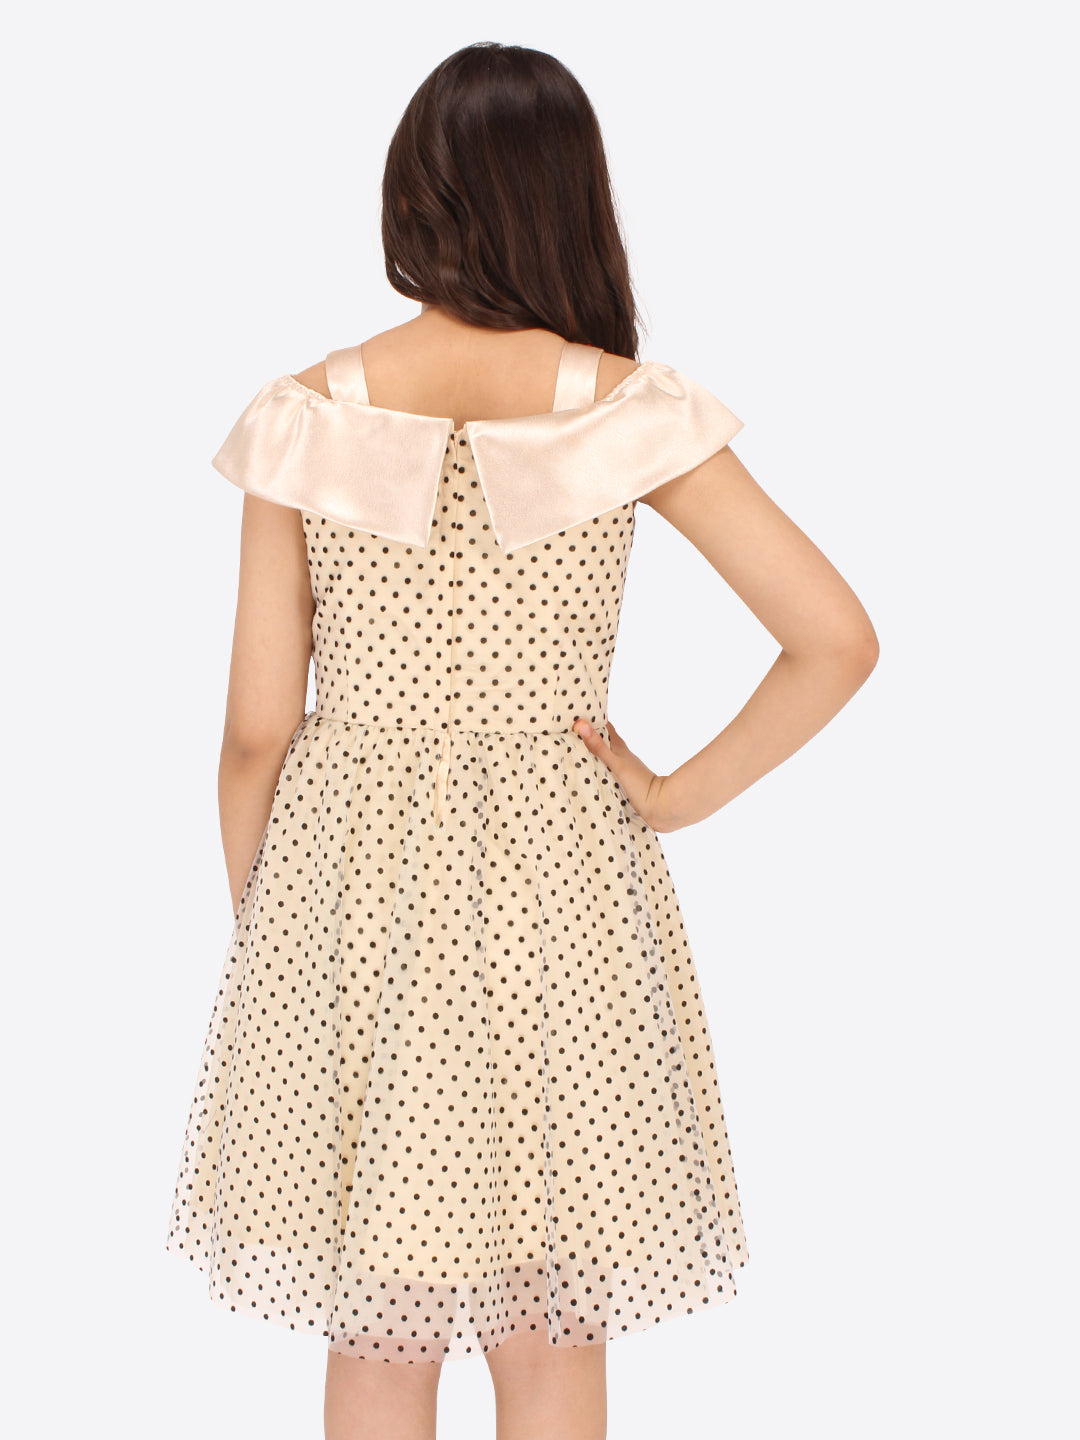 Girls Midi/Knee Length Casual Dress  (Beige, Sleeveless)